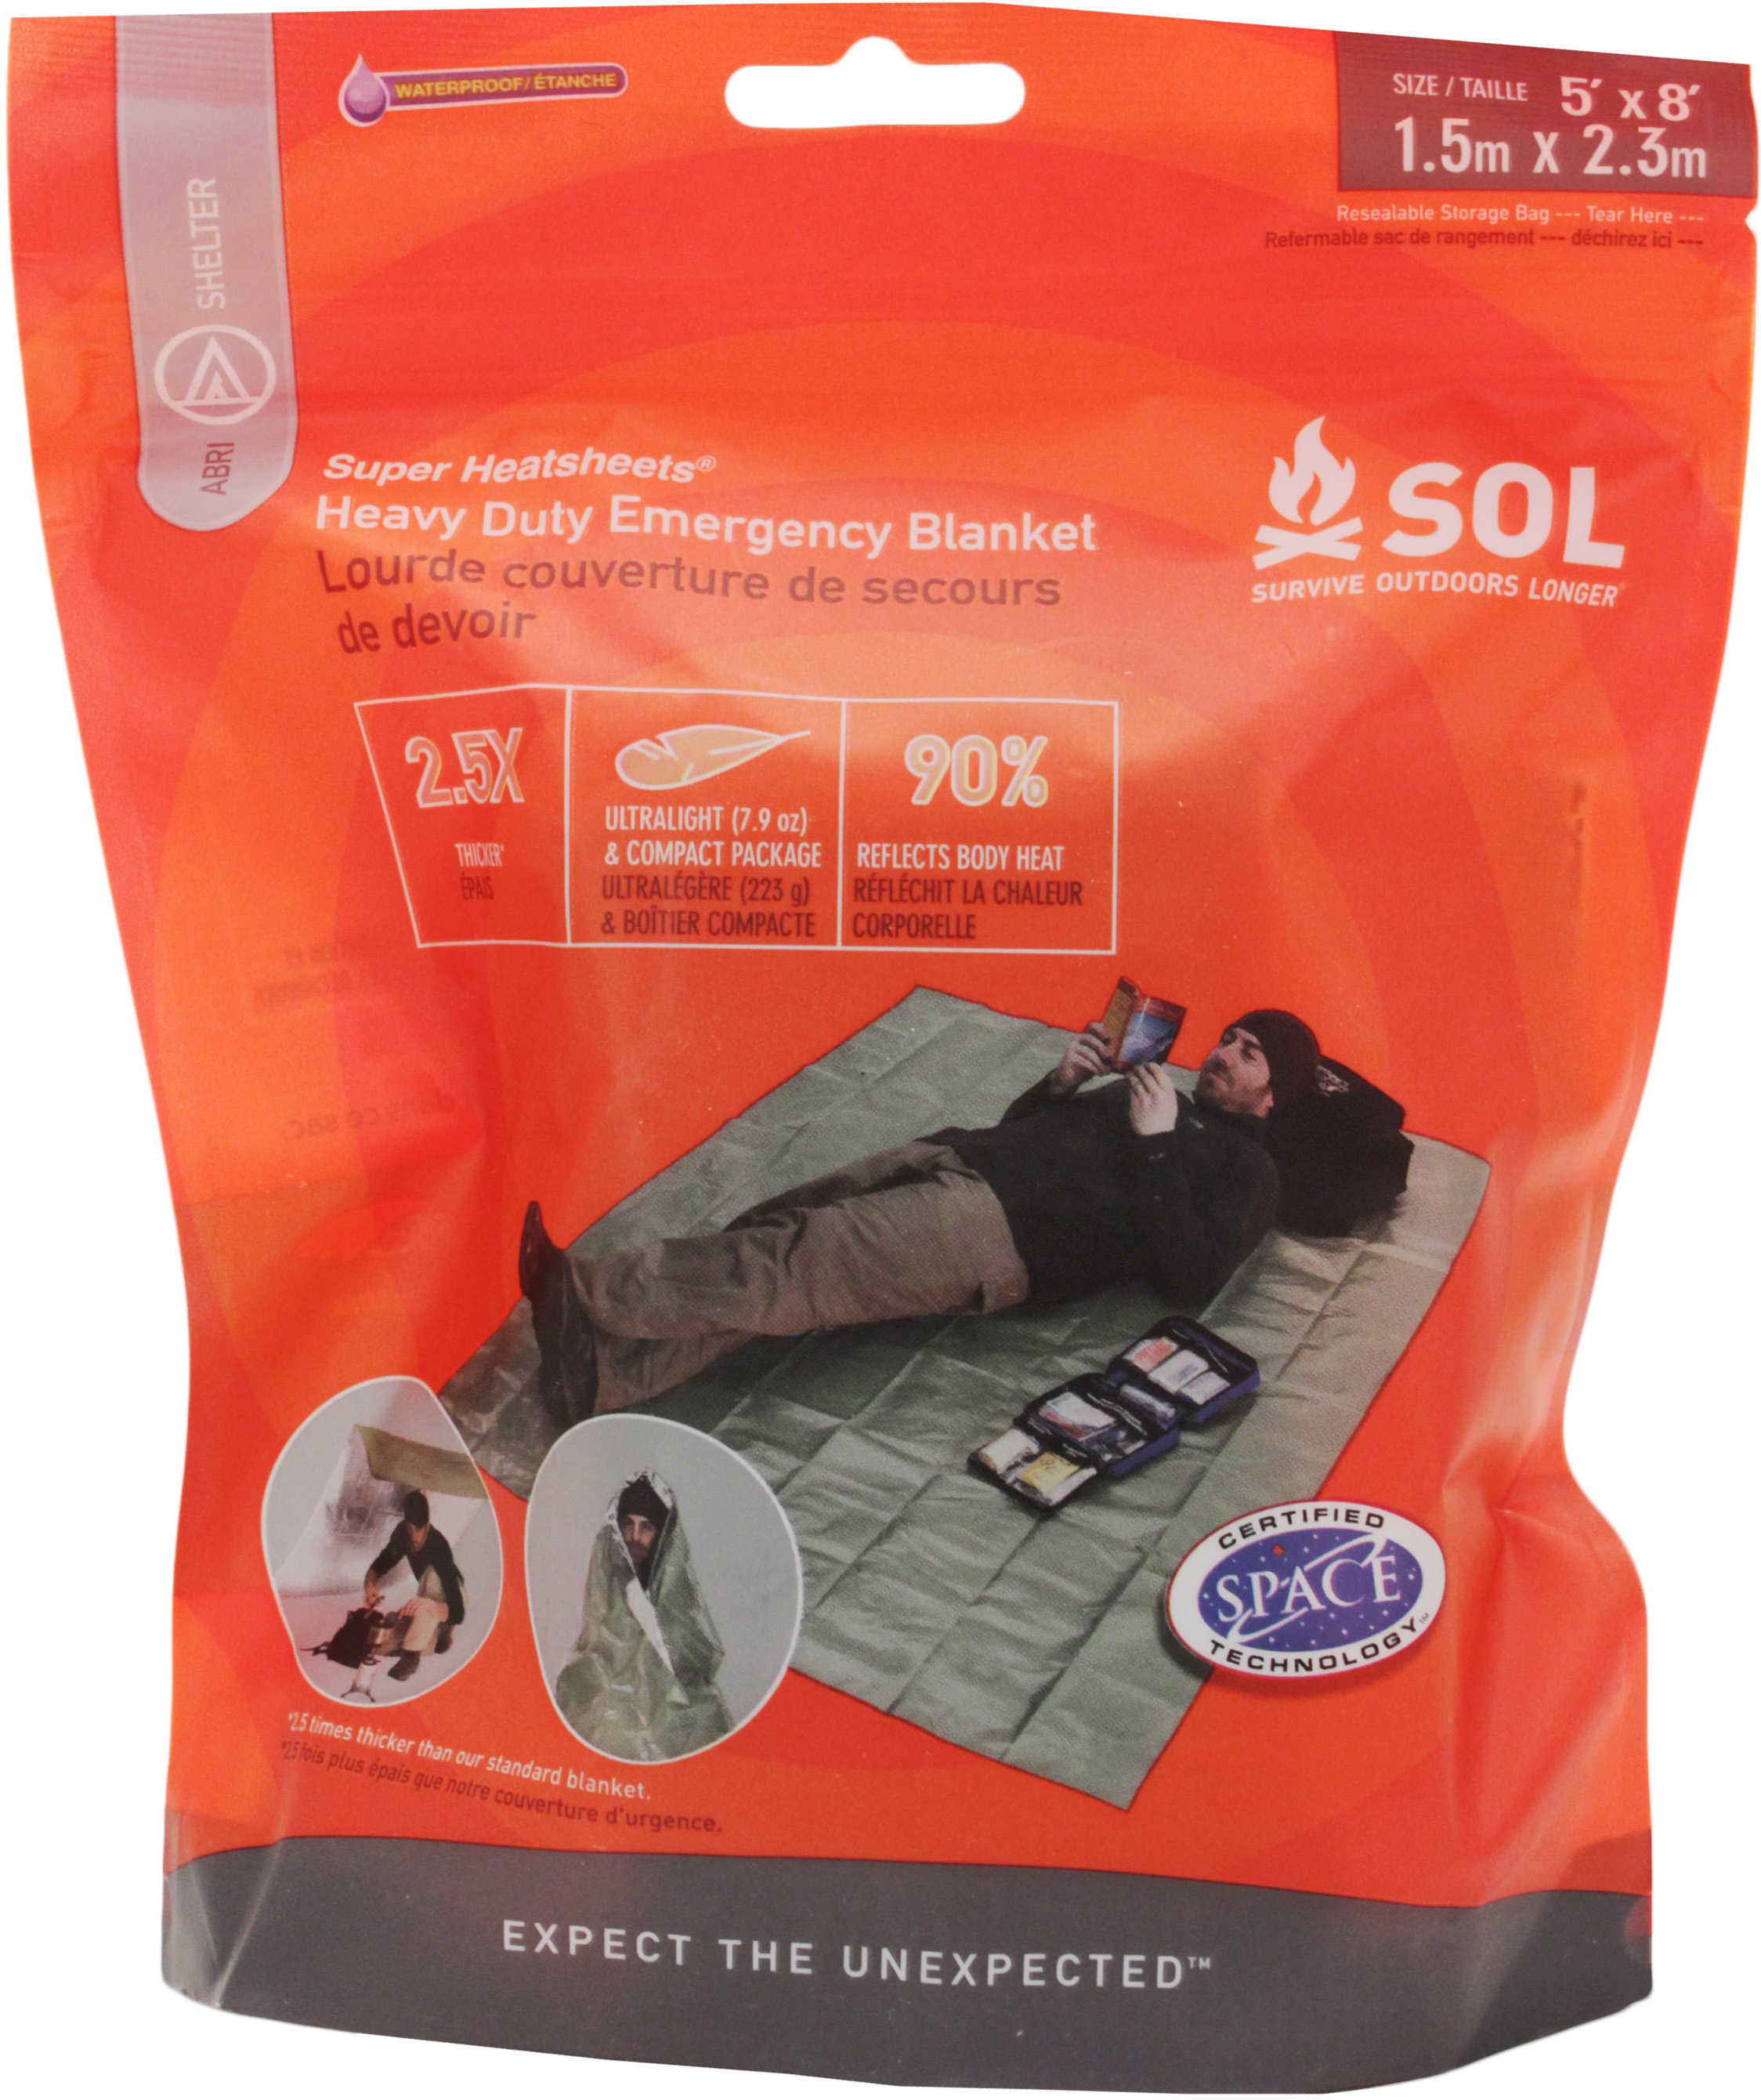 Survive Outdoors Longer / Tender Corp Adventure Medical SOL Series Heavy Duty Emergency Blanket Md: 0140-1225